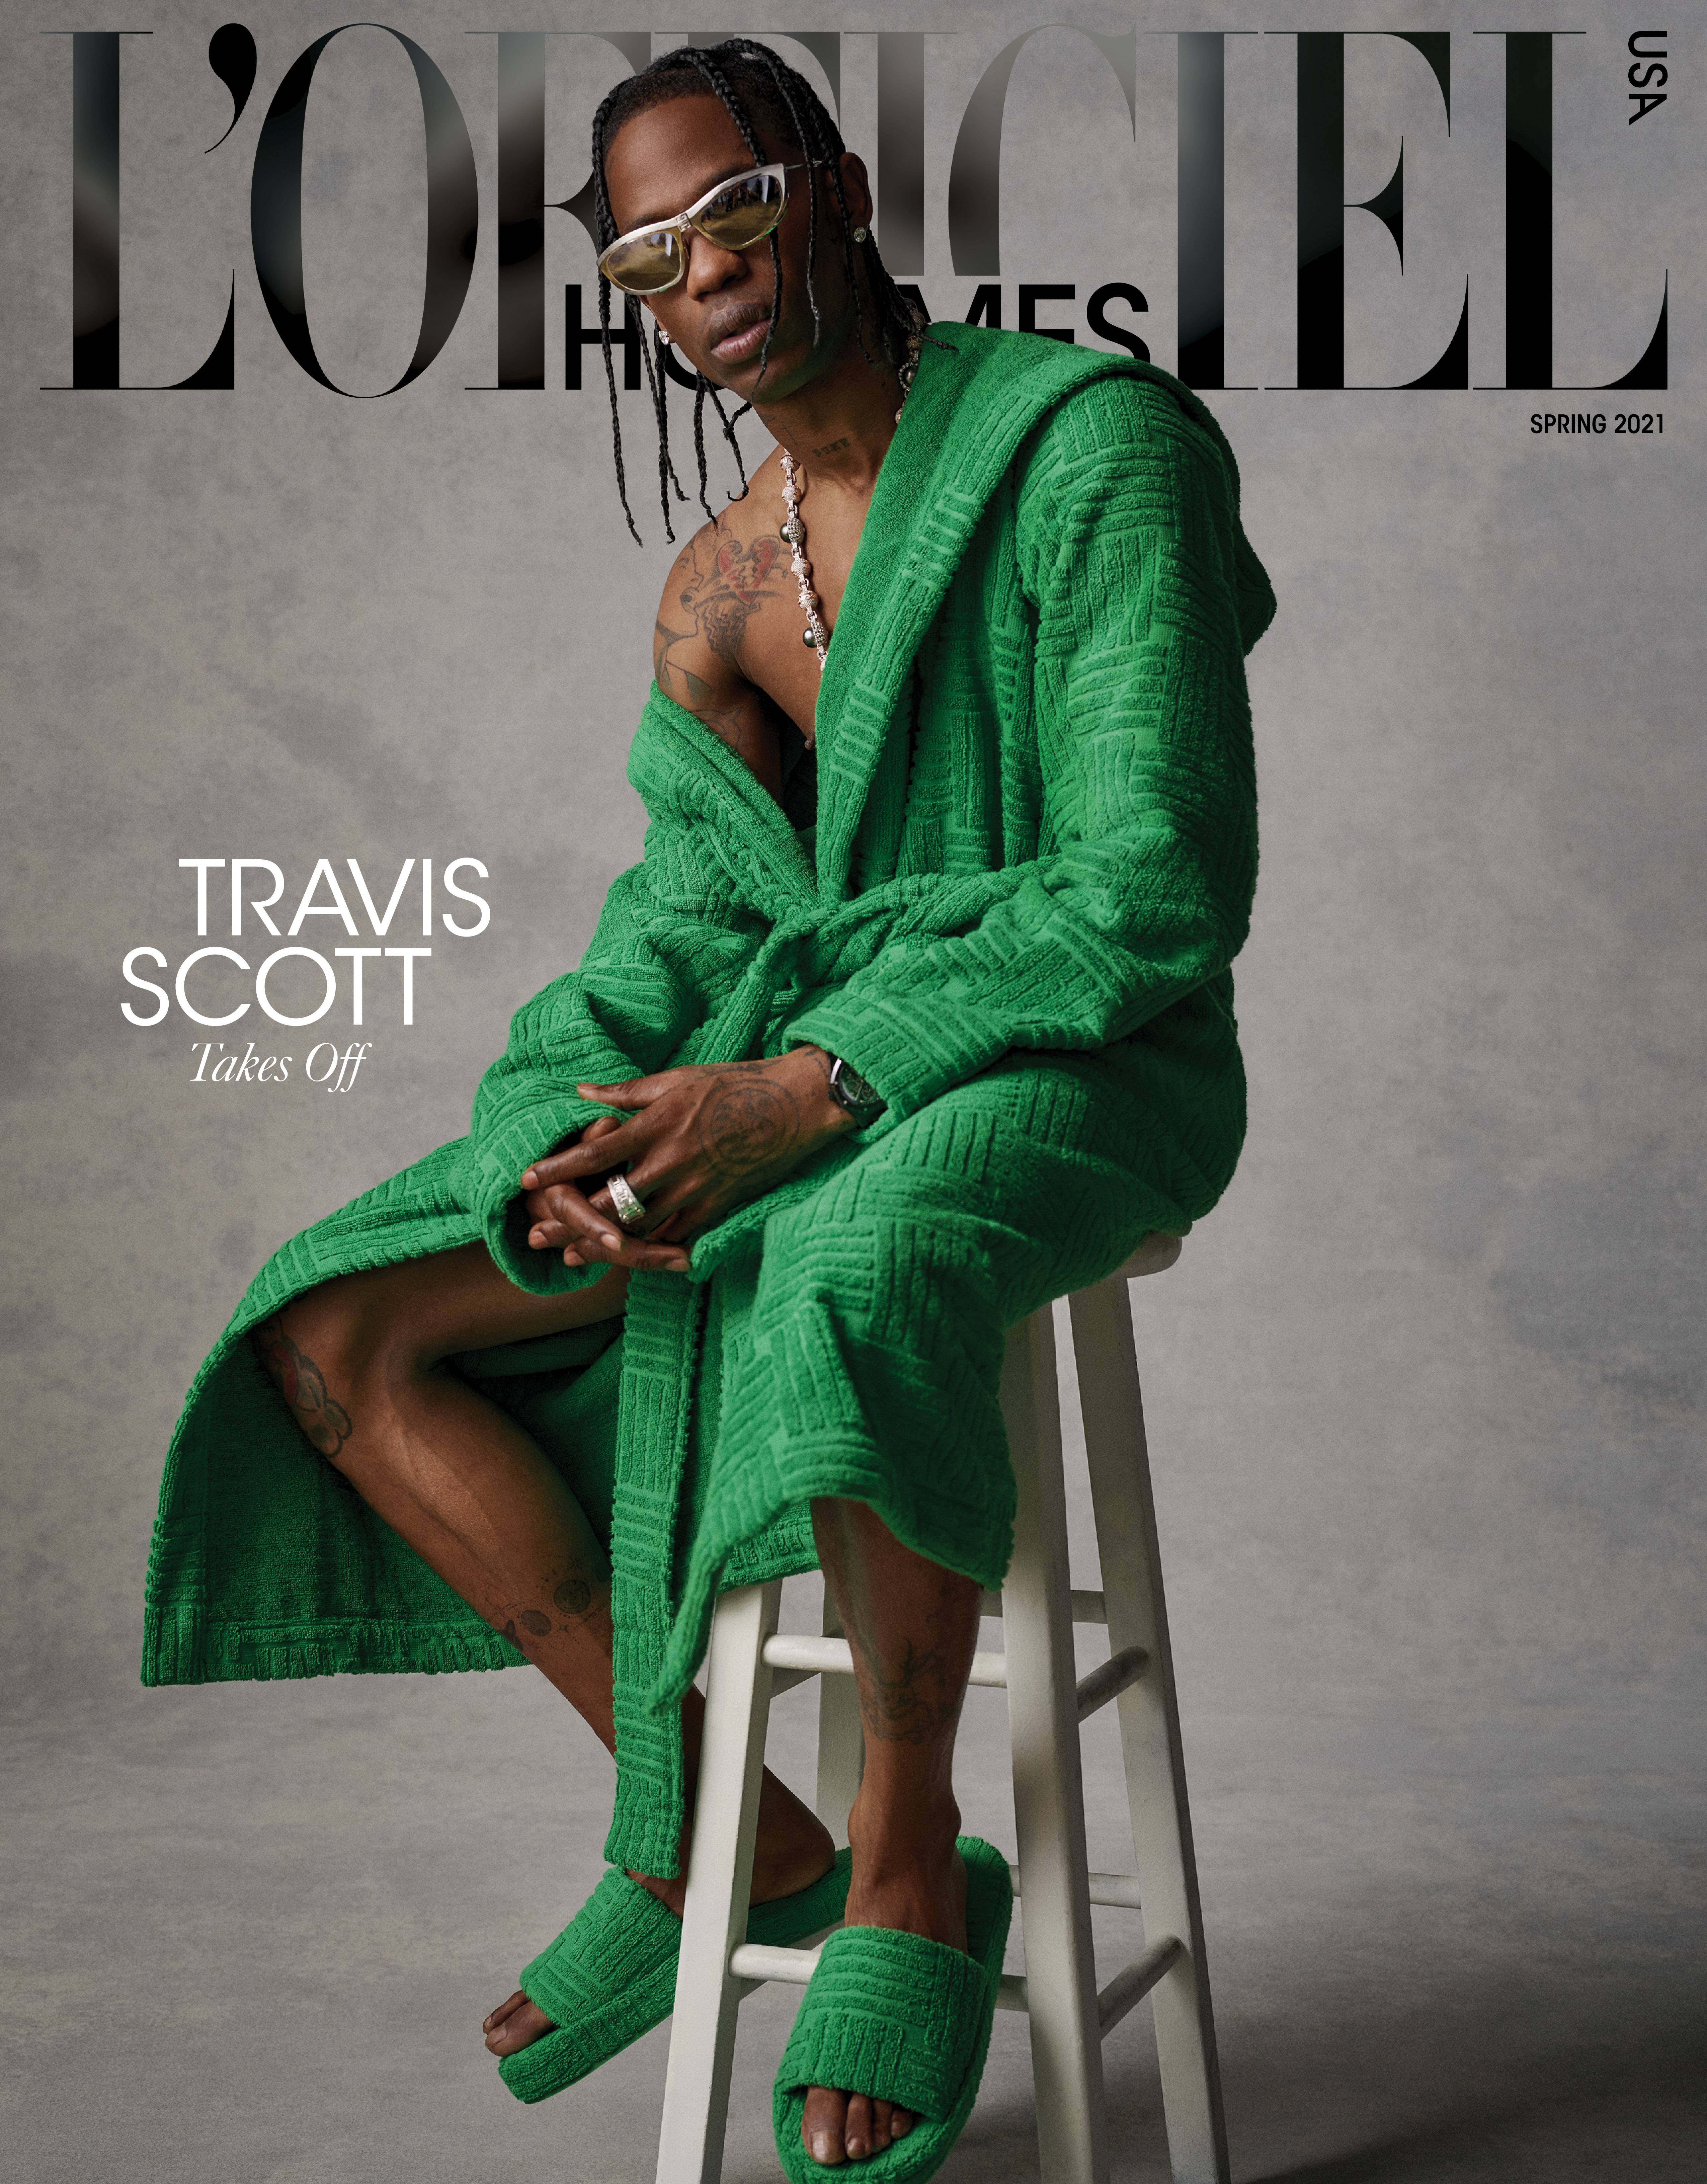 Travis Scott Covers L'OFFICIEL Hommes Spring 2021